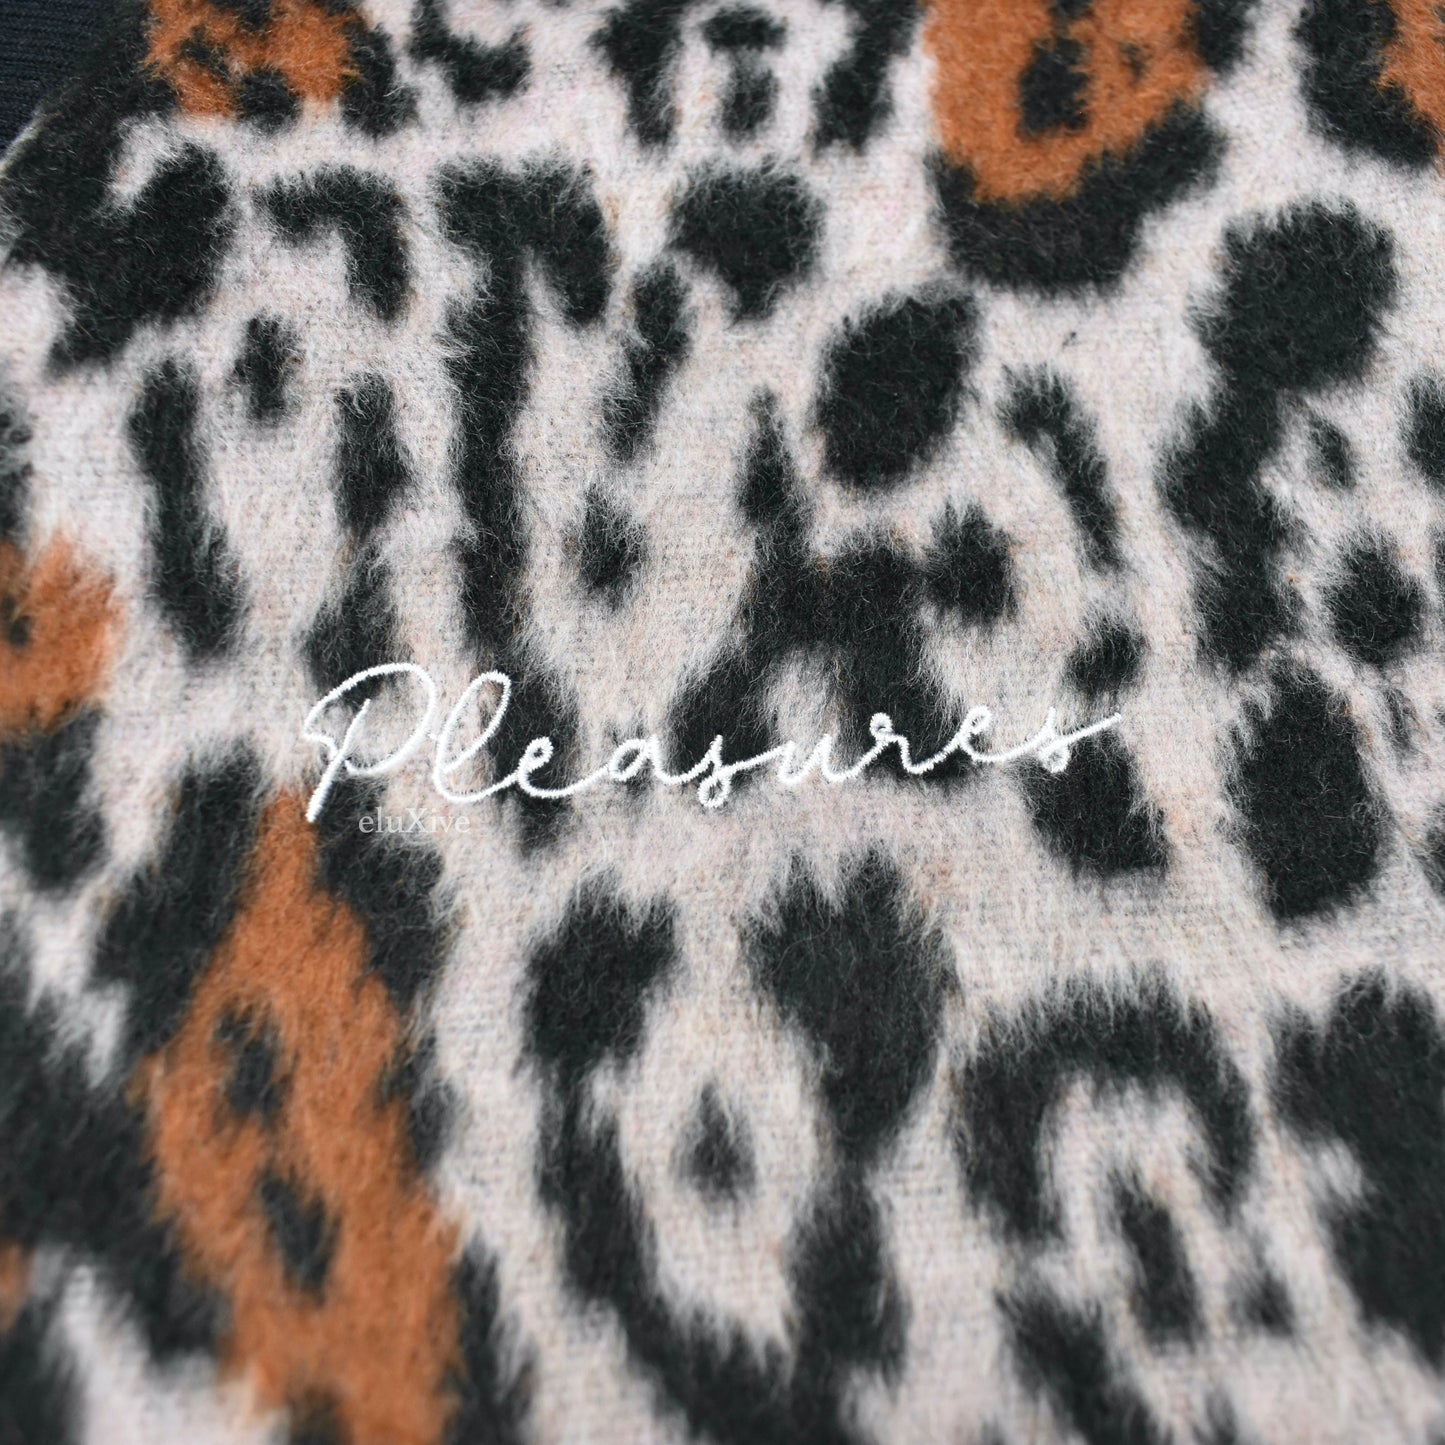 Pleasures - Fuzzy Leopard Woven Boozy Cardigan